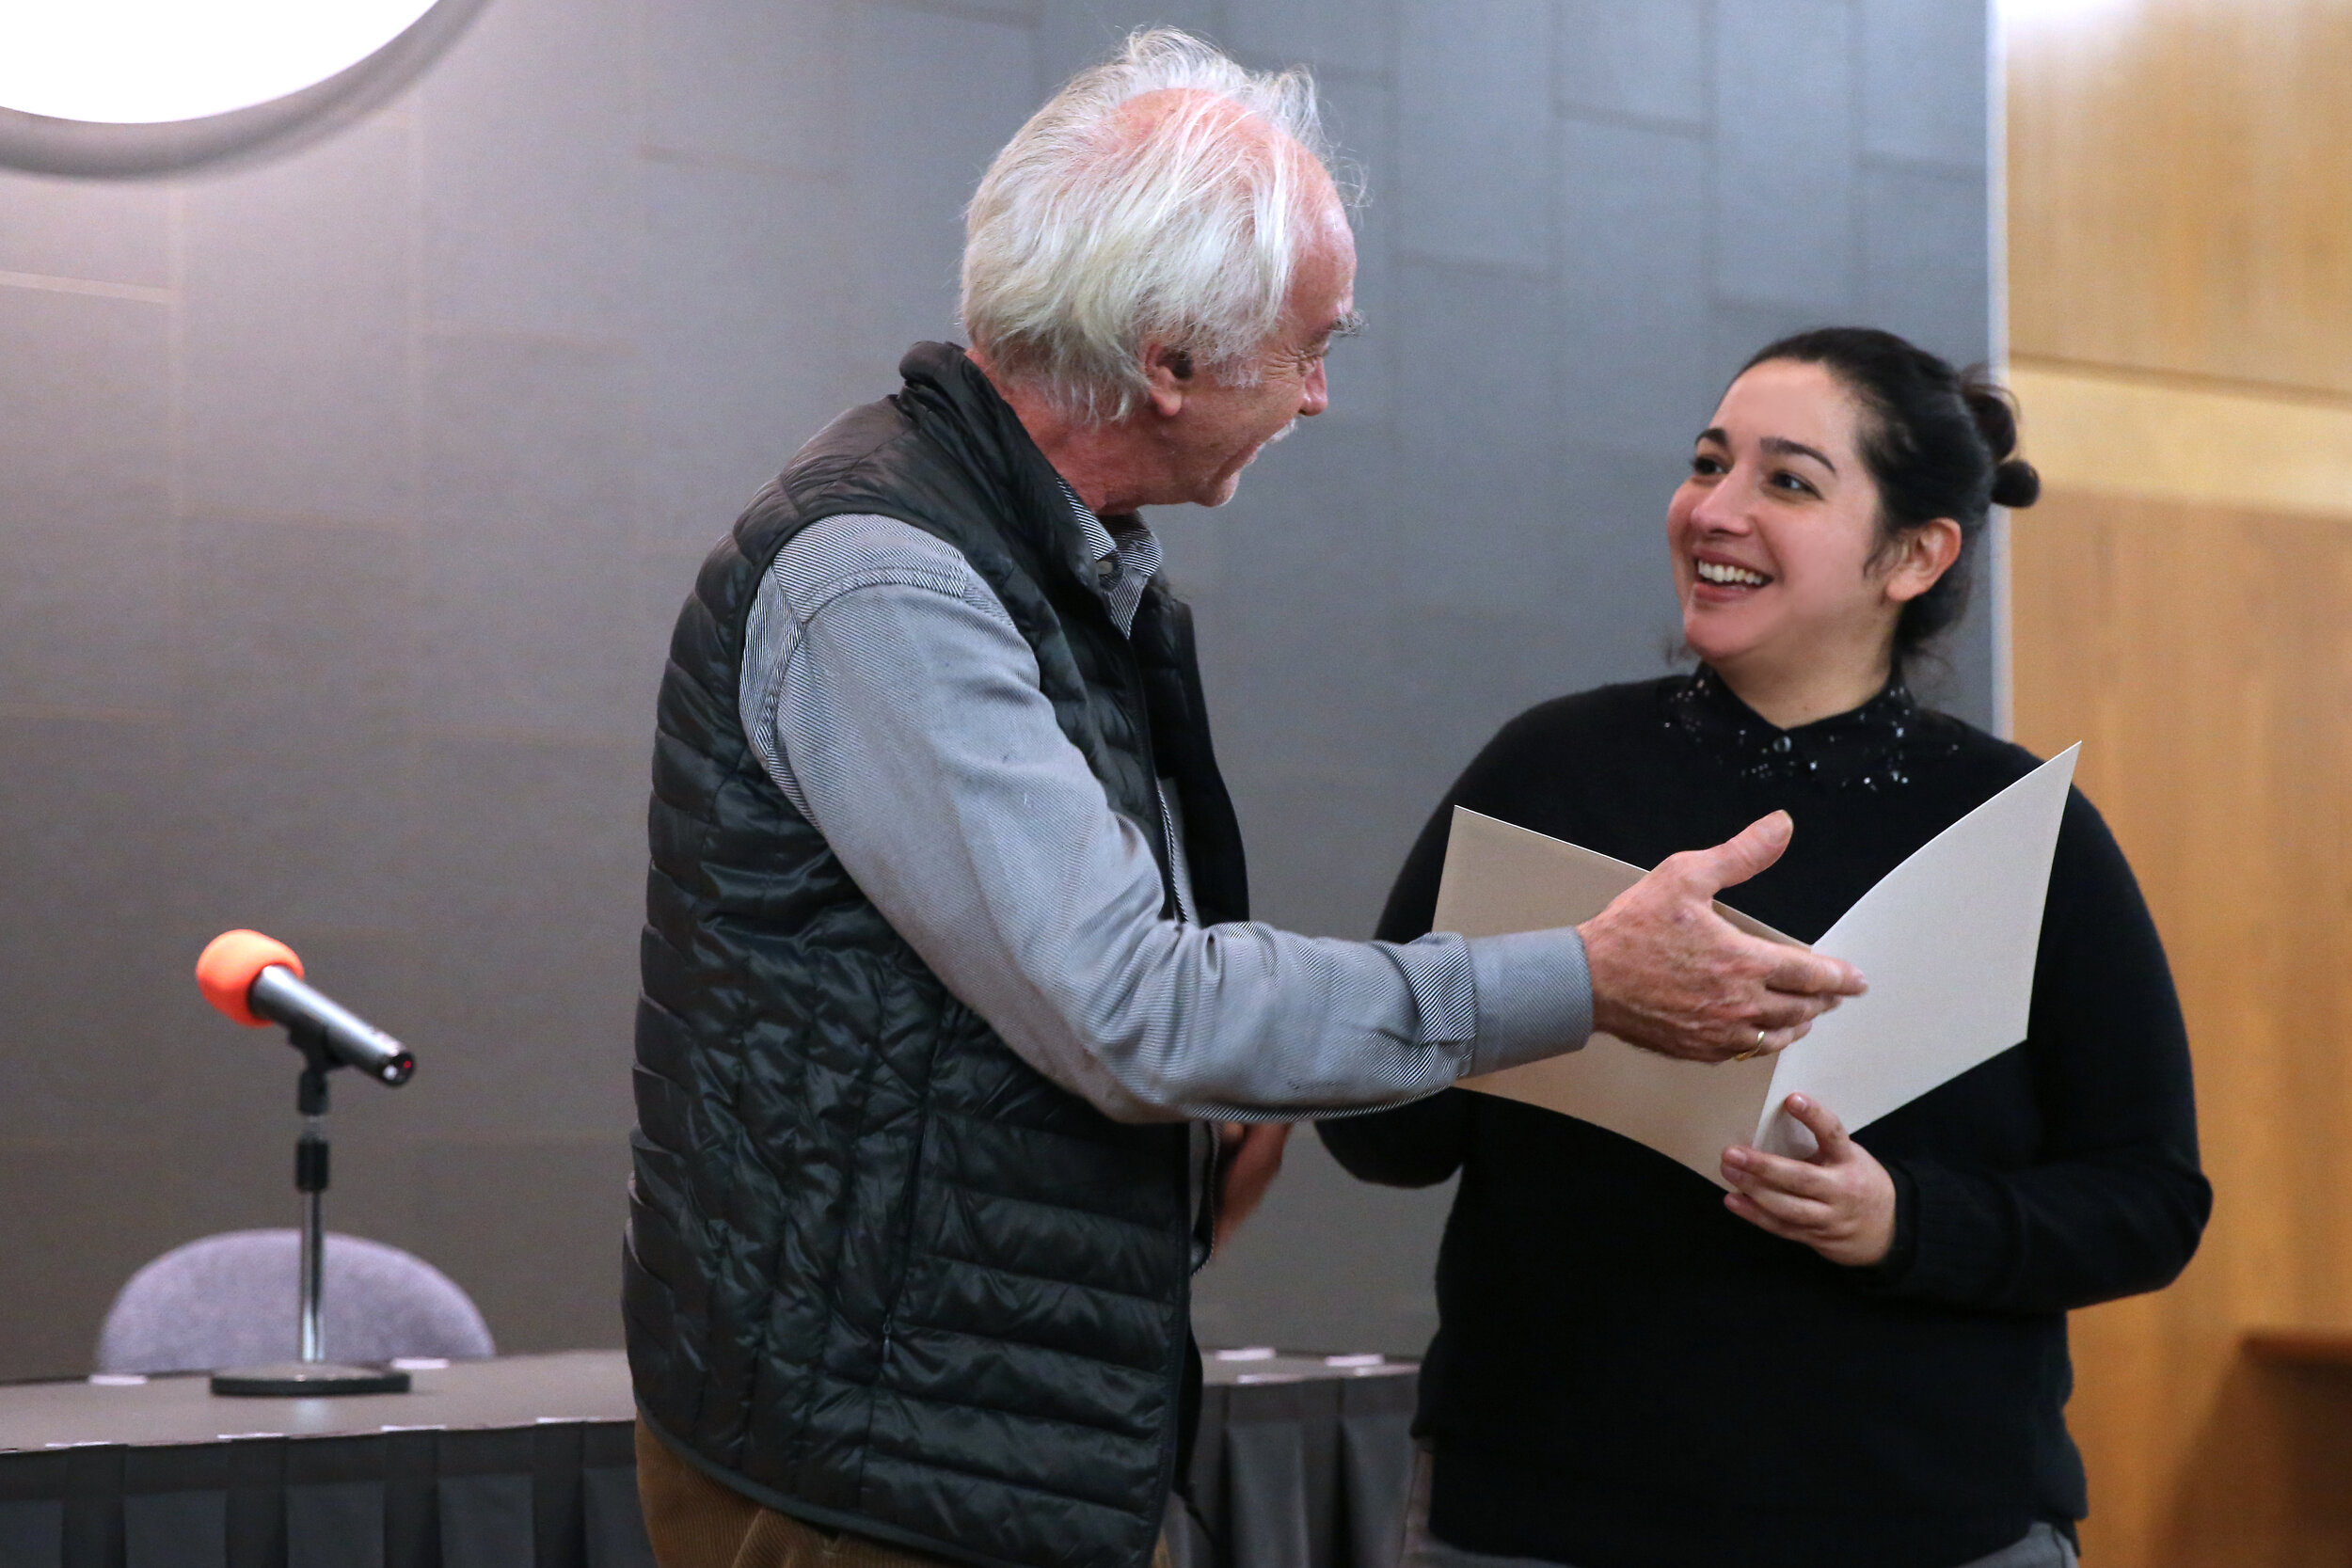 Melchor accepts her award from Jean Radványi